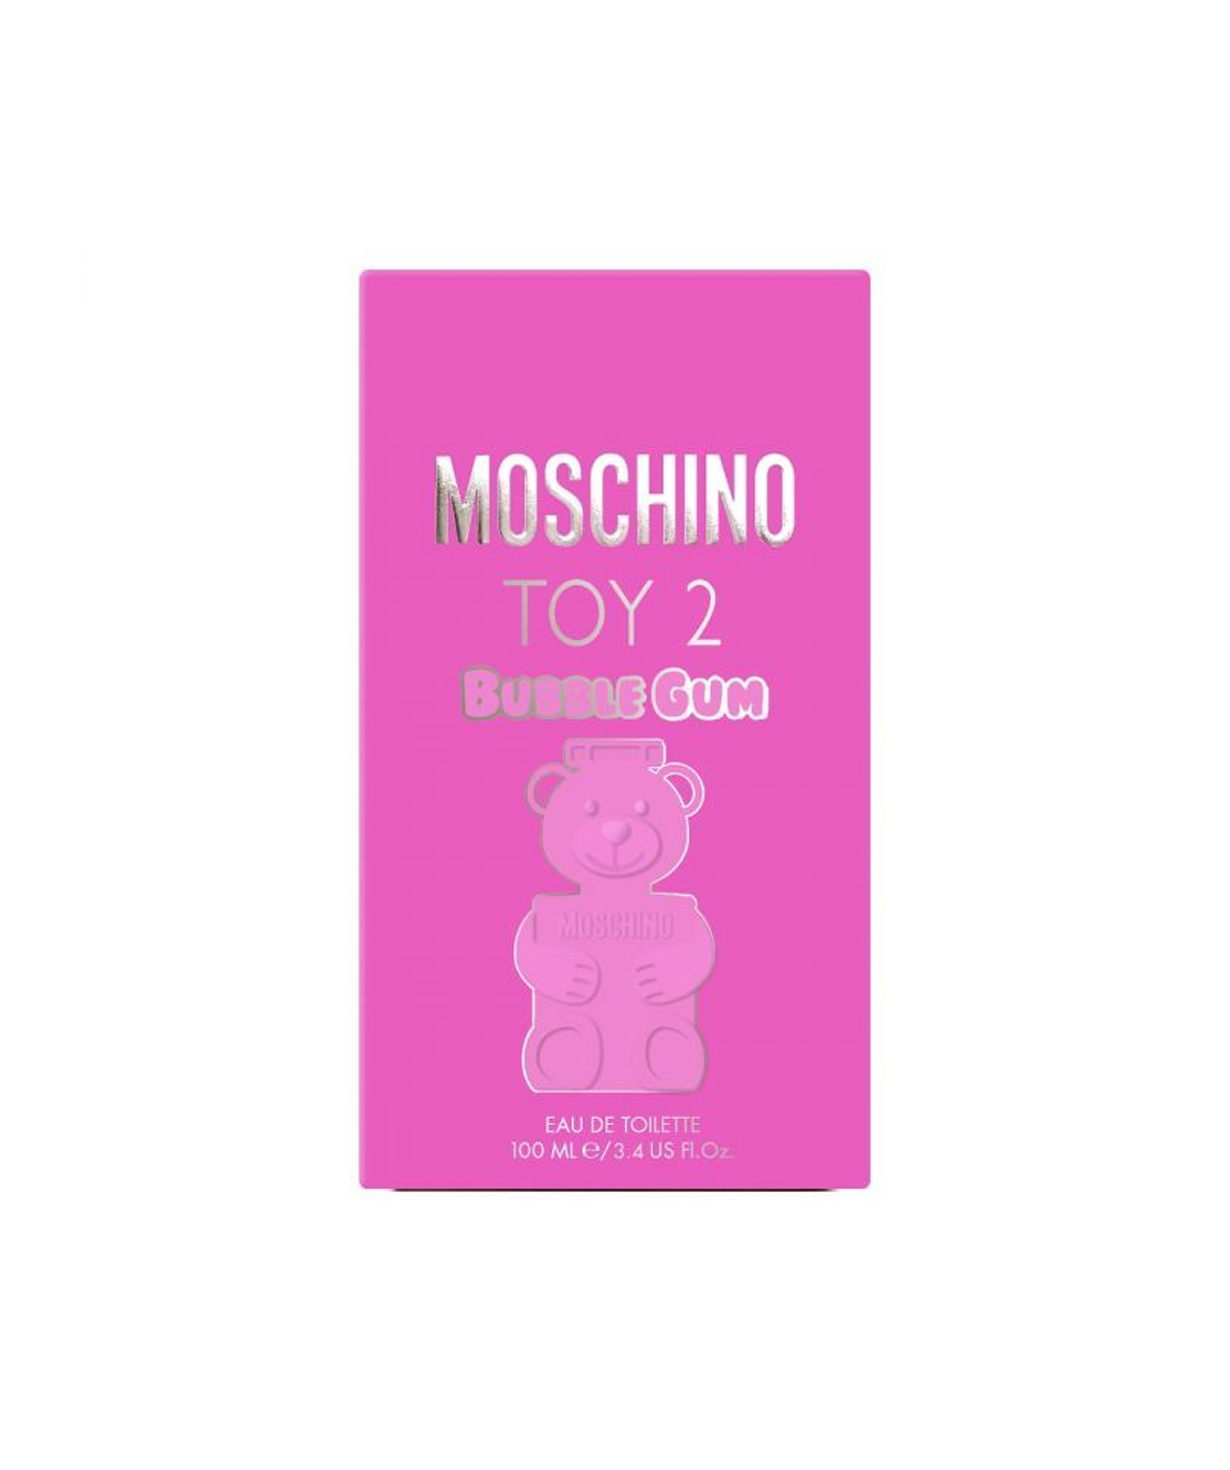 Perfume «Moschino» Toy 2 Bubble Gum, for women, 100 ml